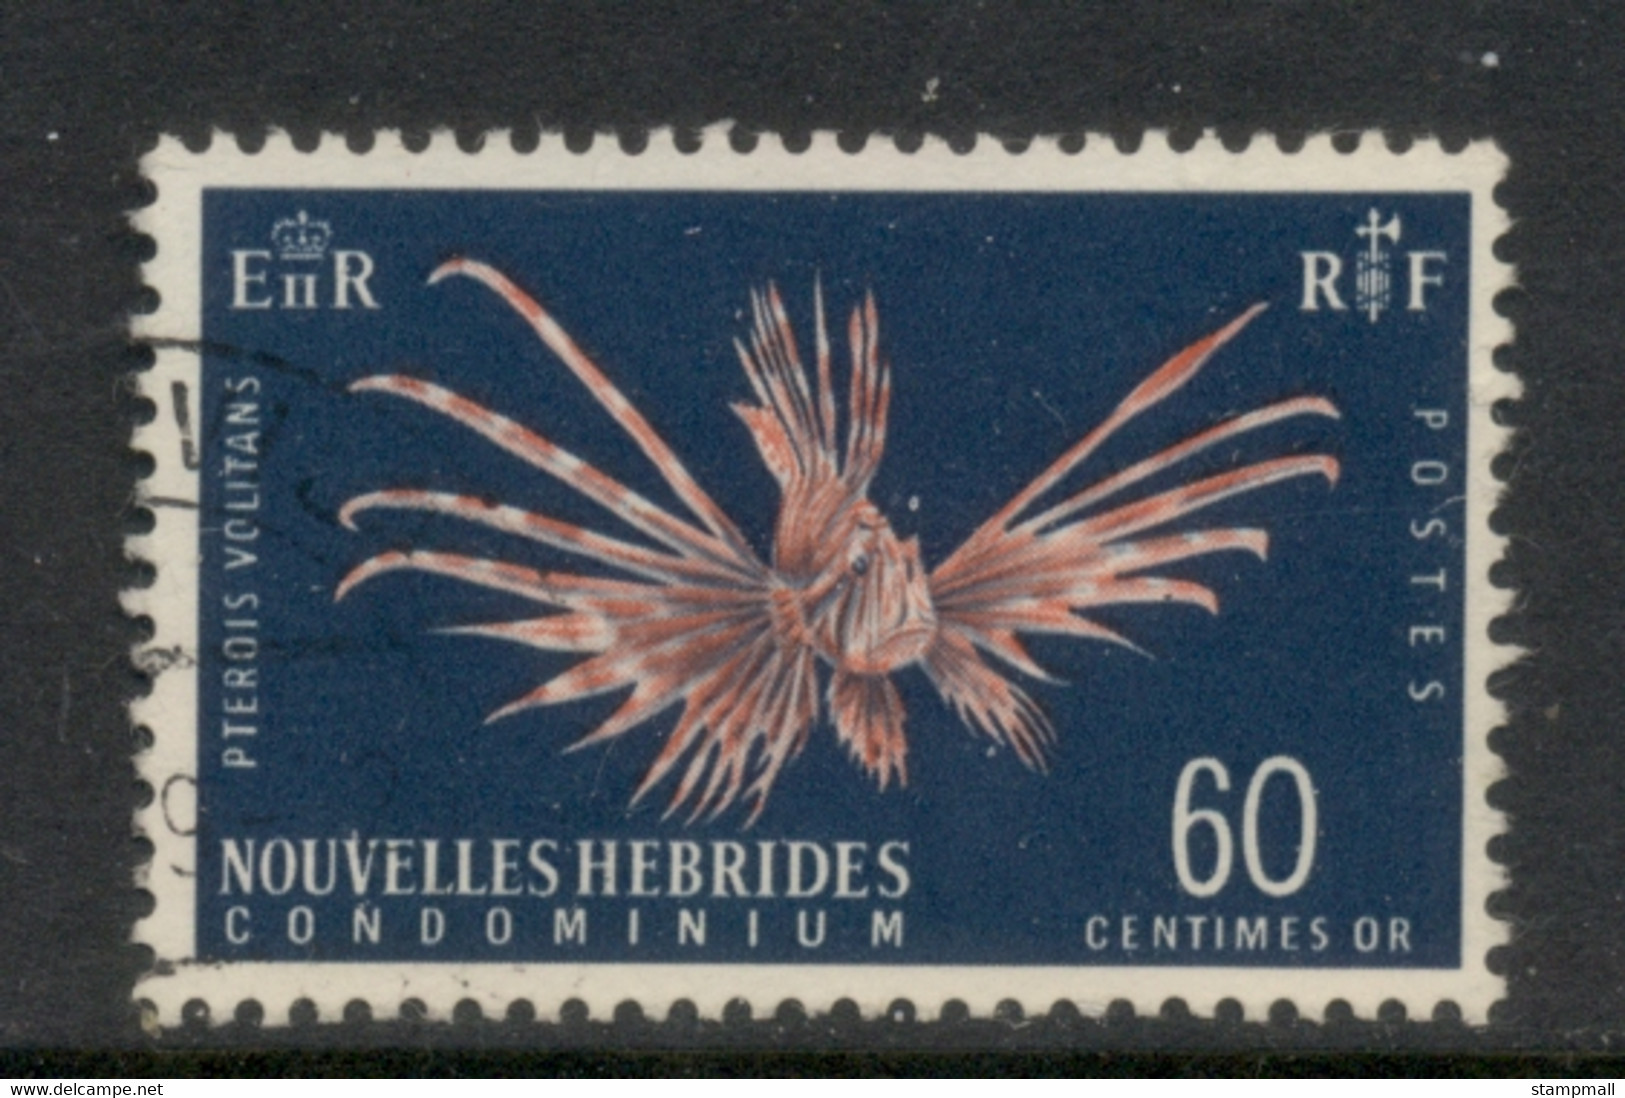 New Hebrides (Fr) 1963-67 Pictorials 60c FU - Used Stamps